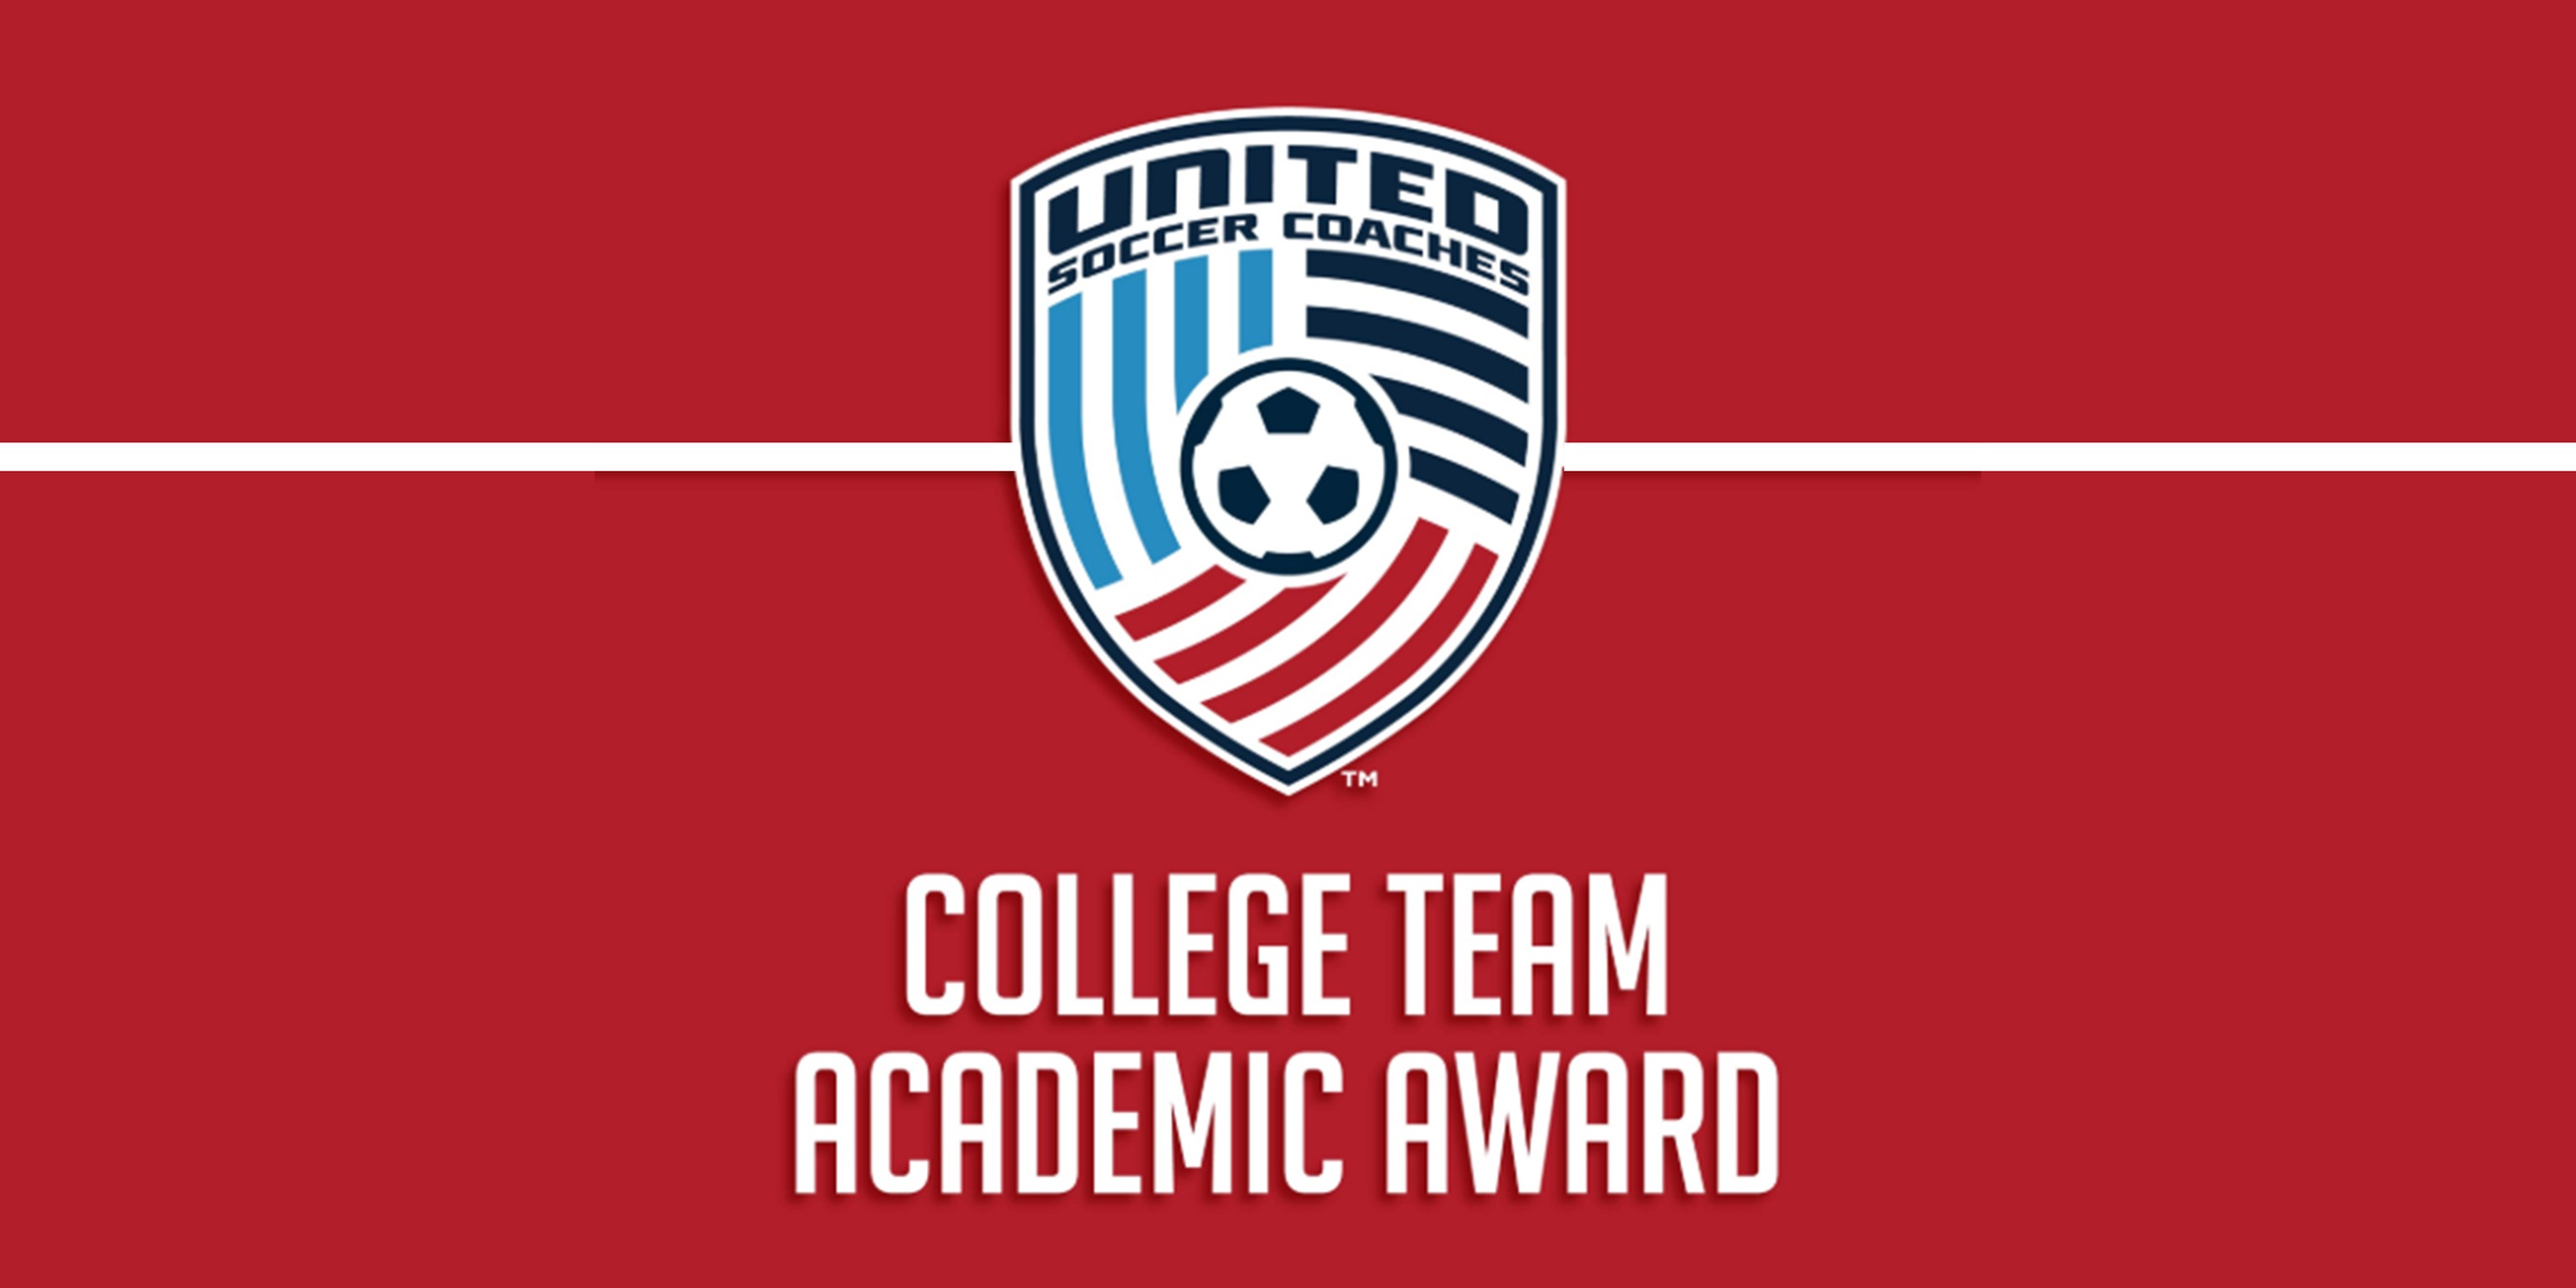 Men's and Women's Soccer Programs Earn United Soccer Coaches College Team Academic Award